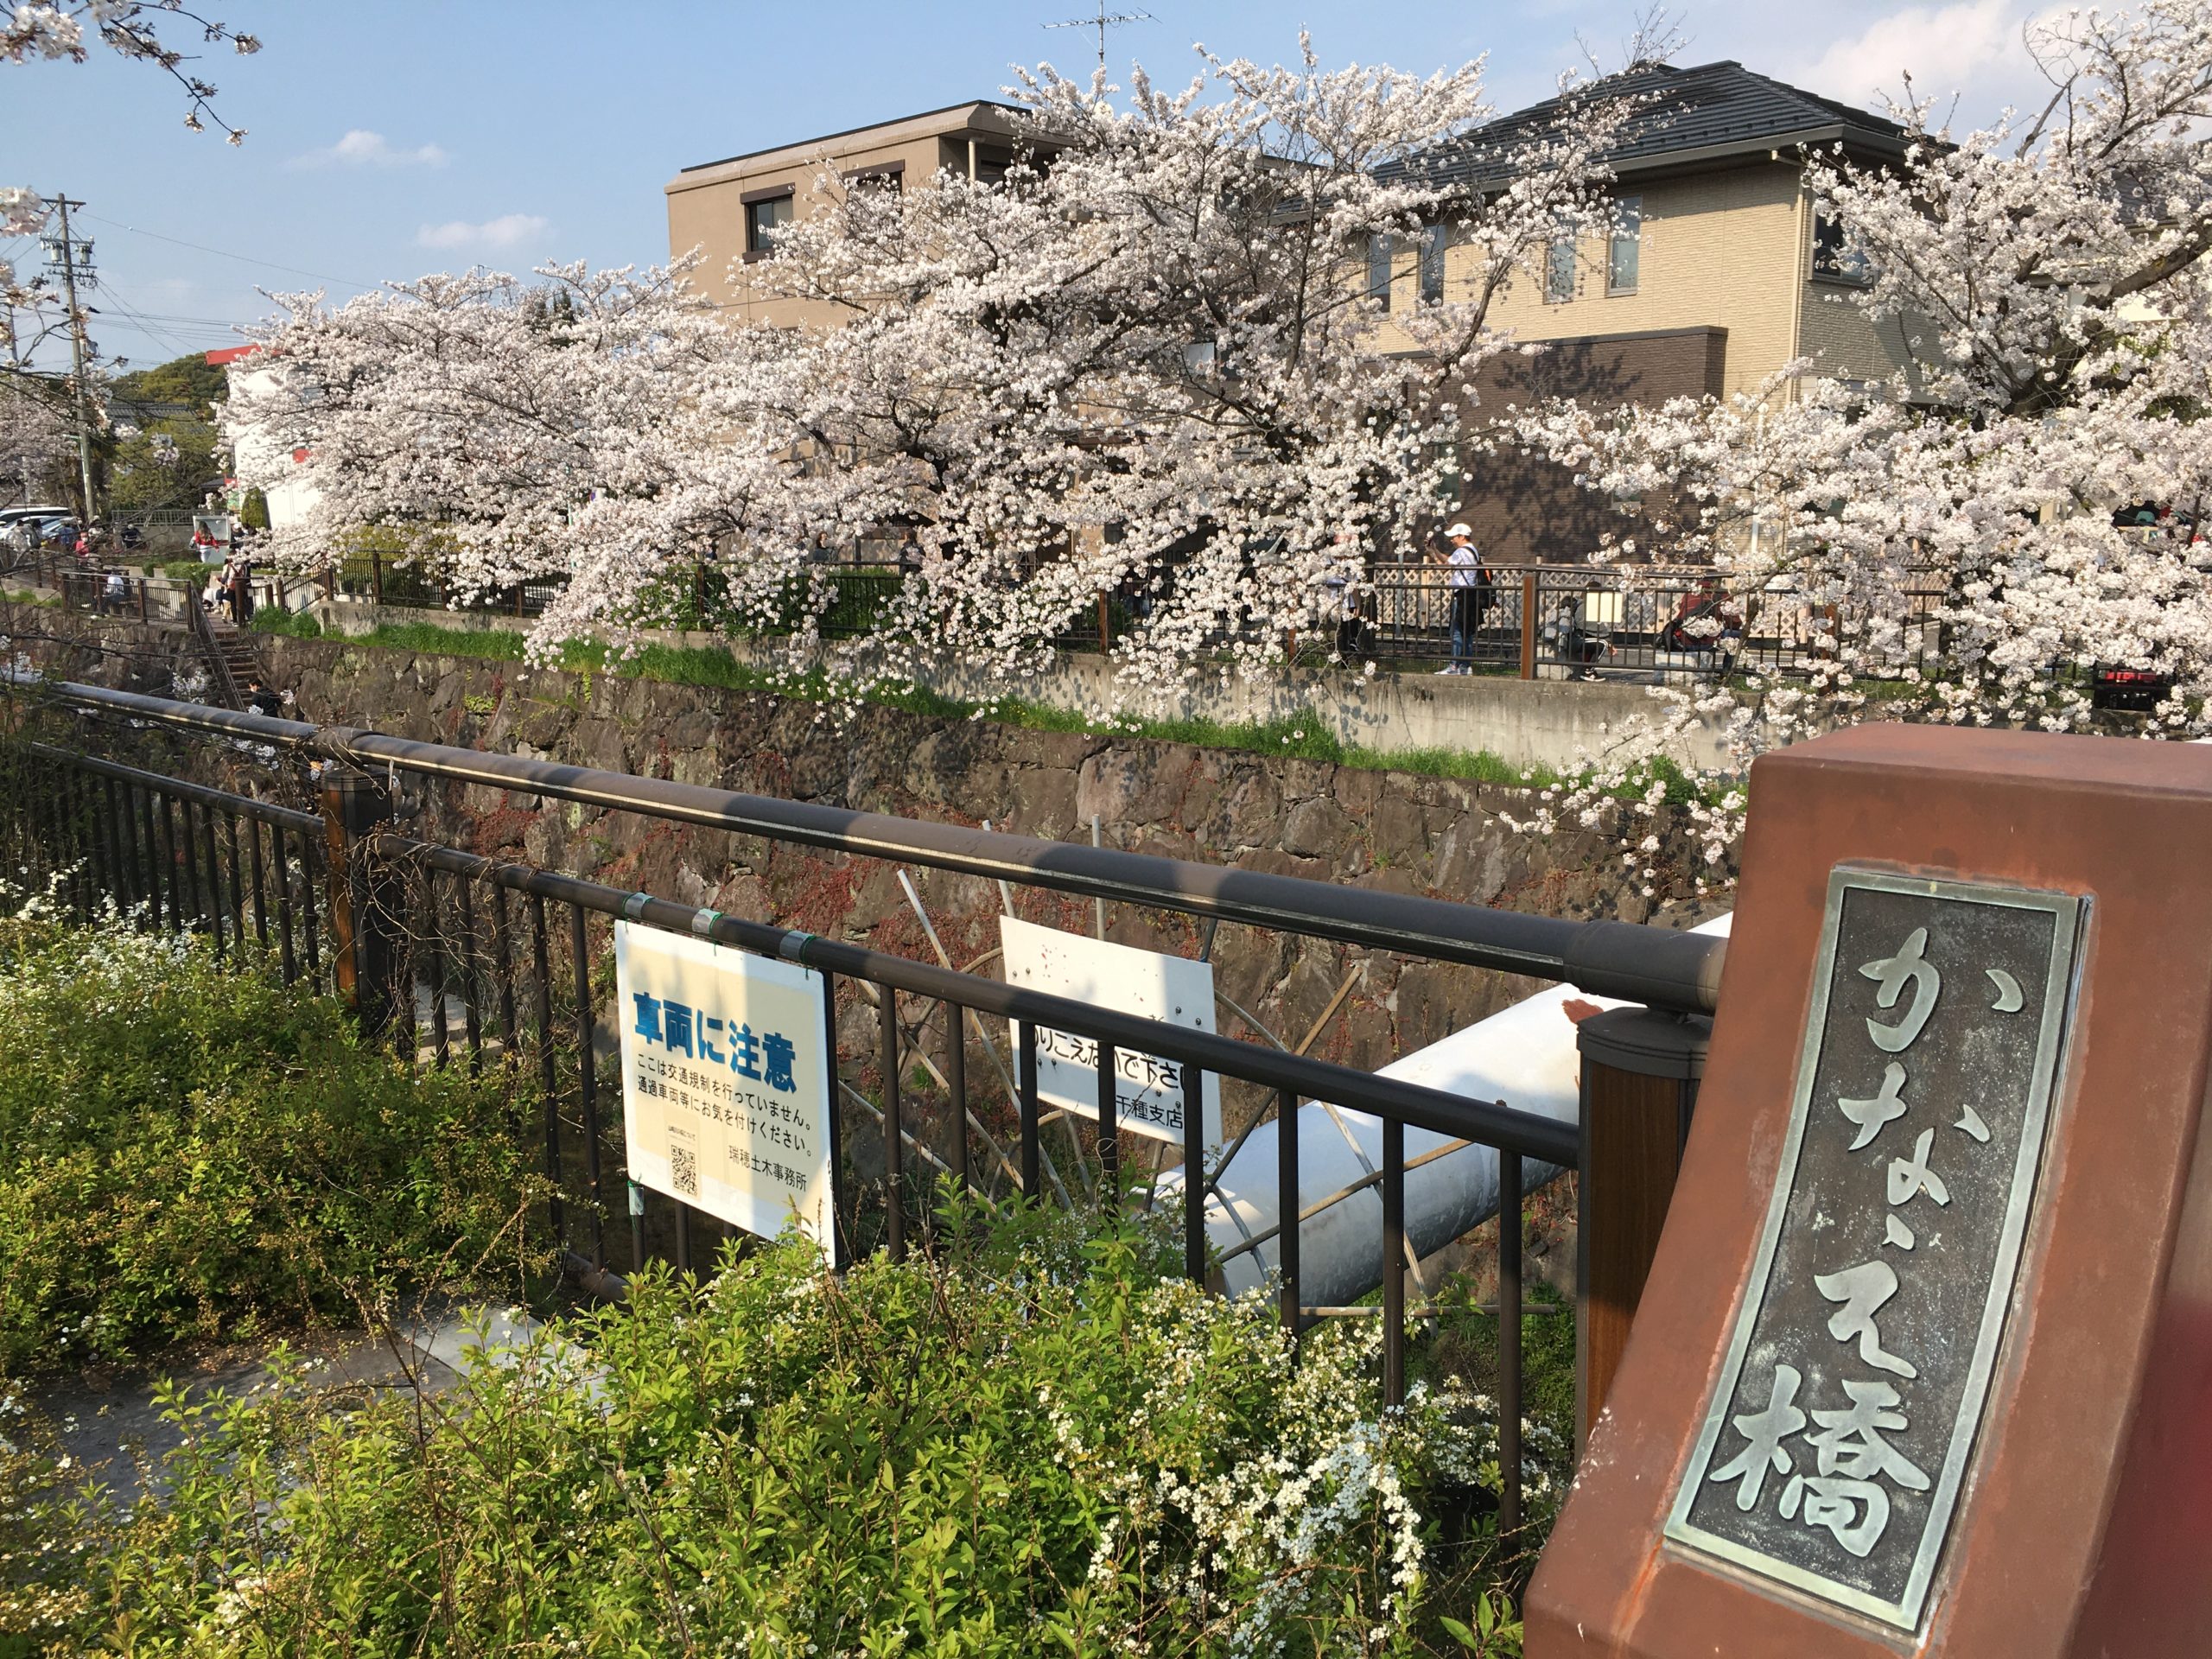 yamazaki-river-sakura